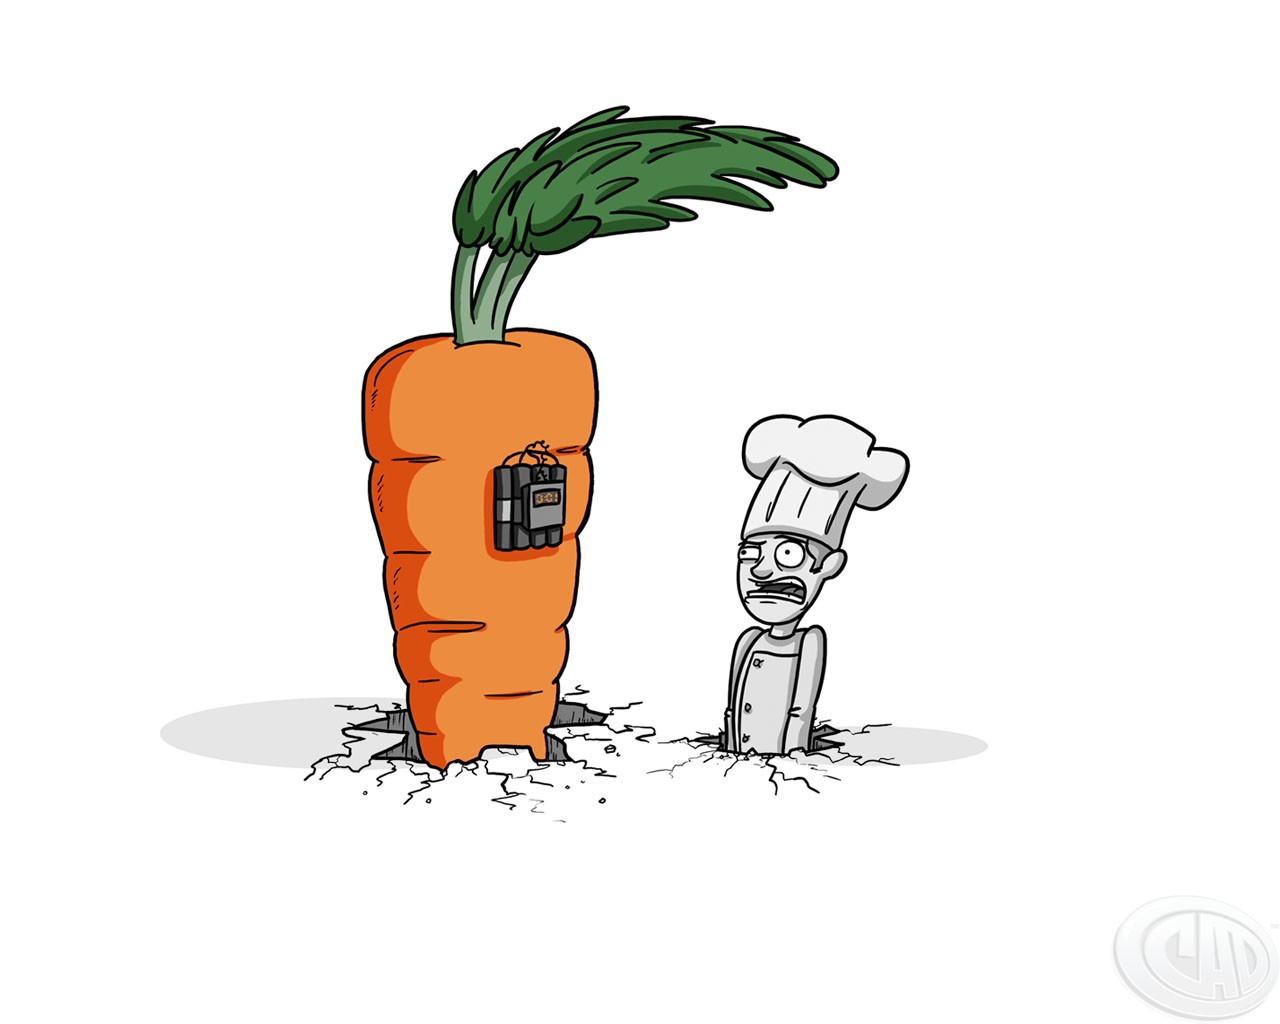 General 1280x1024 humor simple background selective coloring carrots white background artwork food vegetables Ctrl+Alt+Del